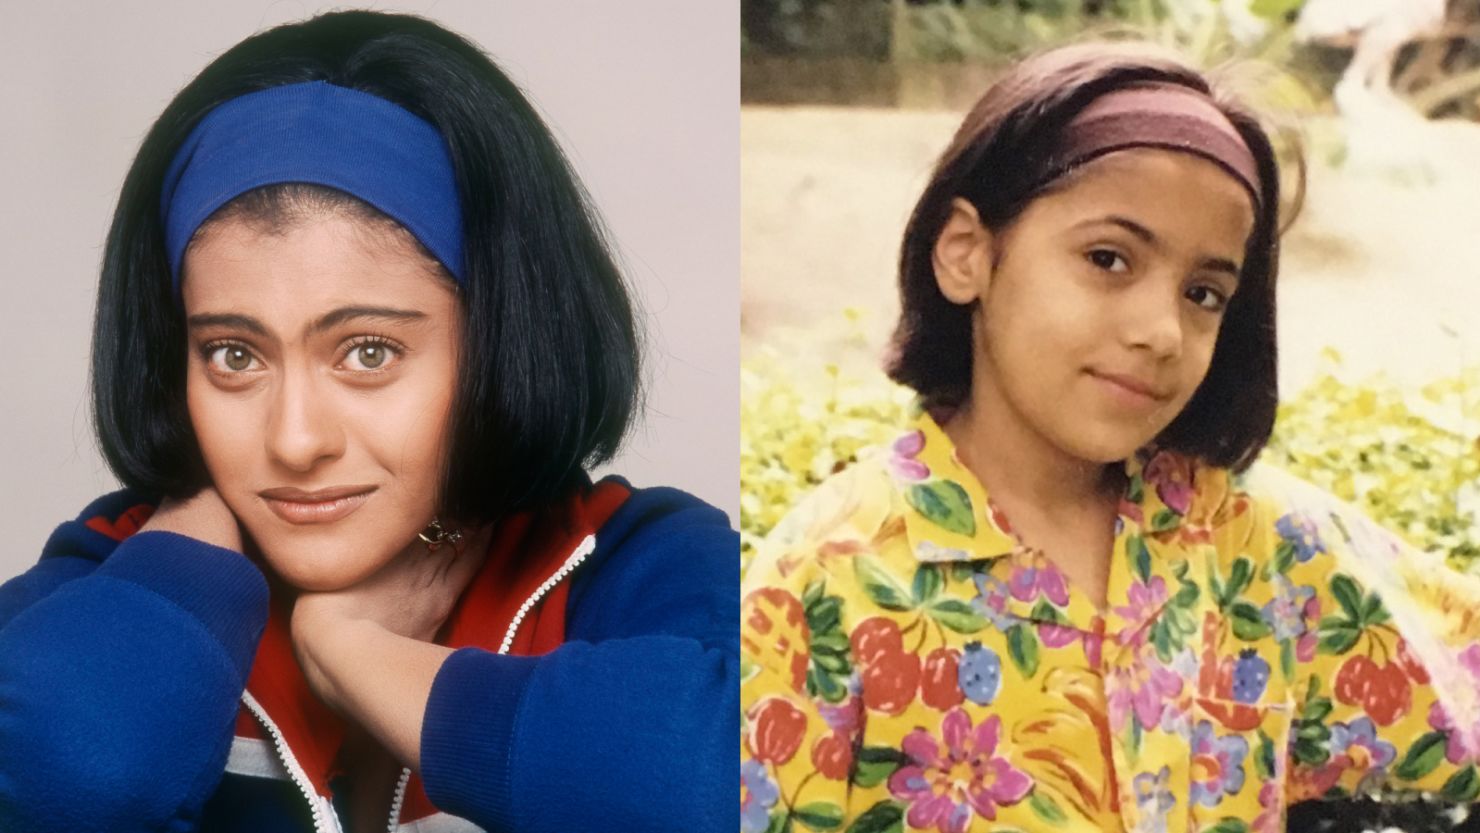 Alisha Haridasani as a child had a hair style inspired by the 1998 Bollywood film "Kuch Kuch Hota Hai".